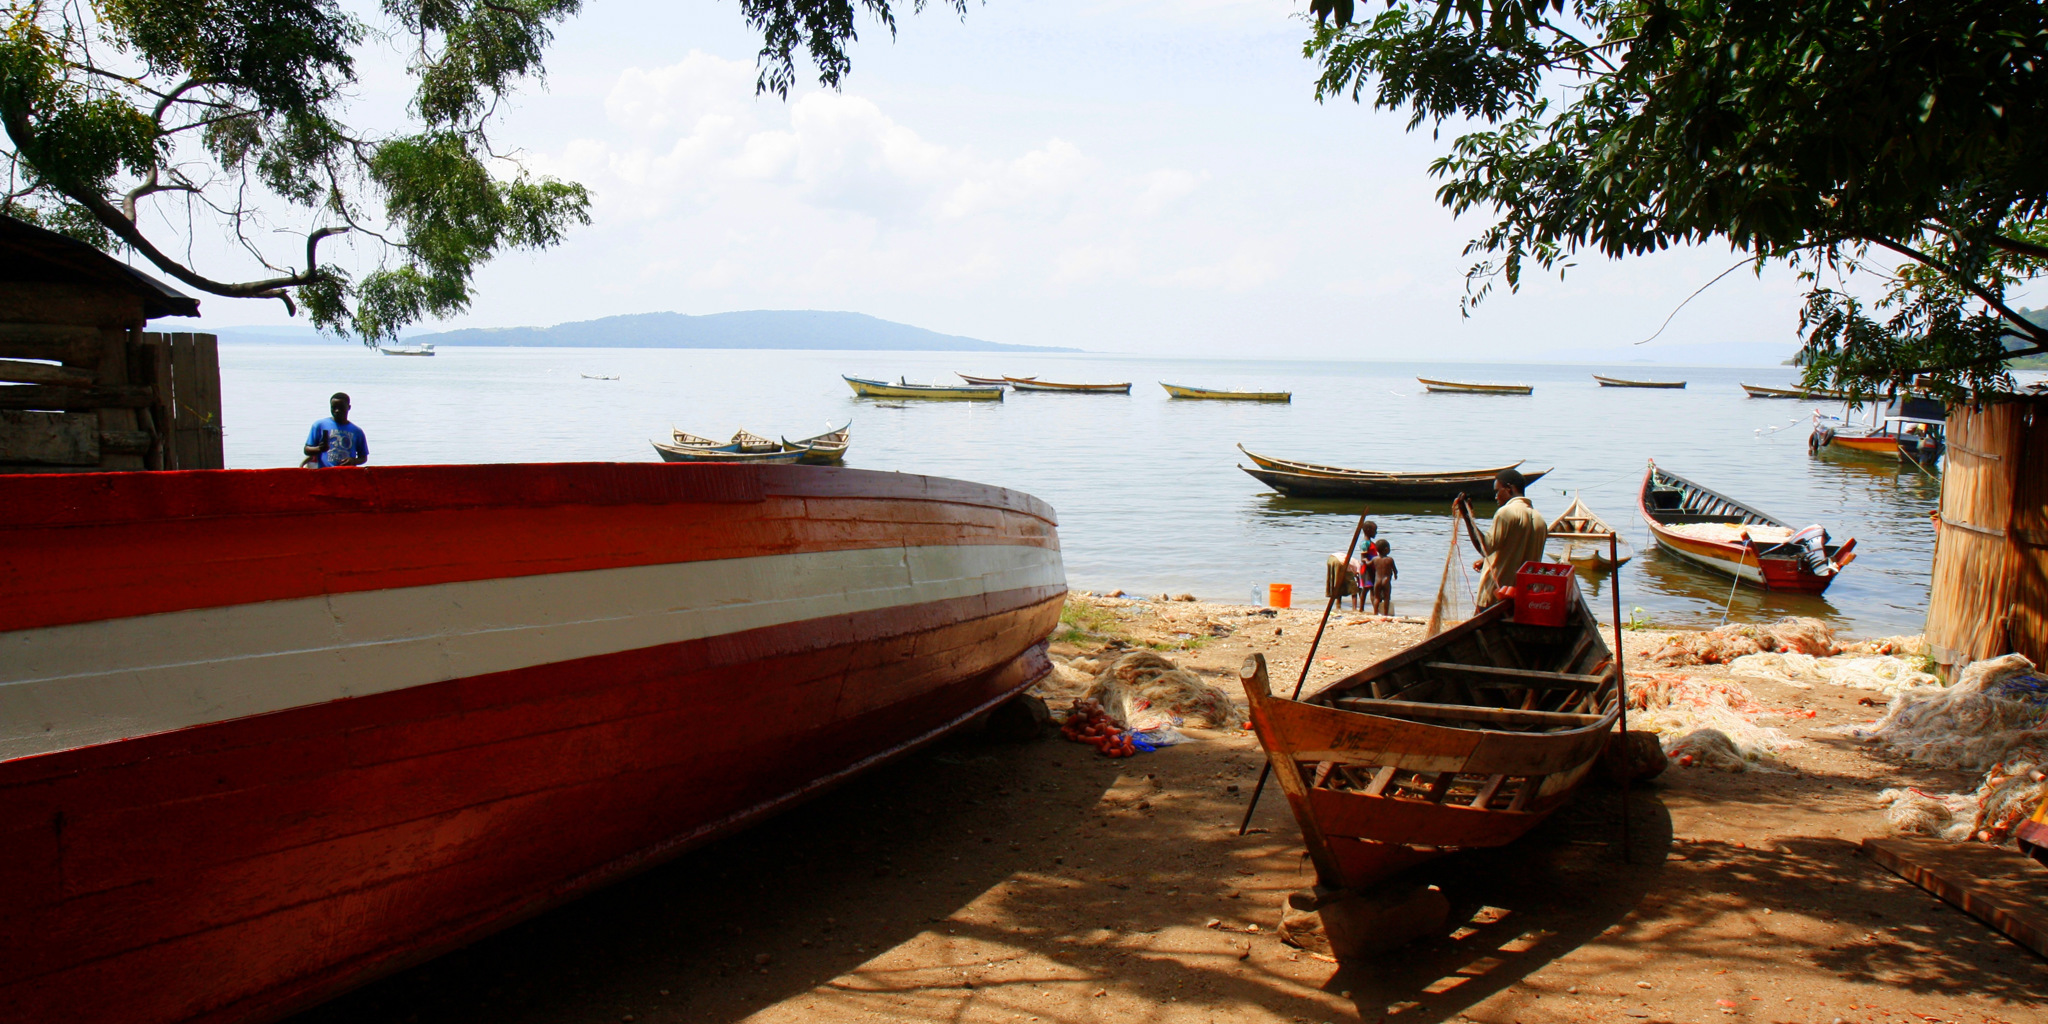 Rubondo Island local fishing boats kasende island